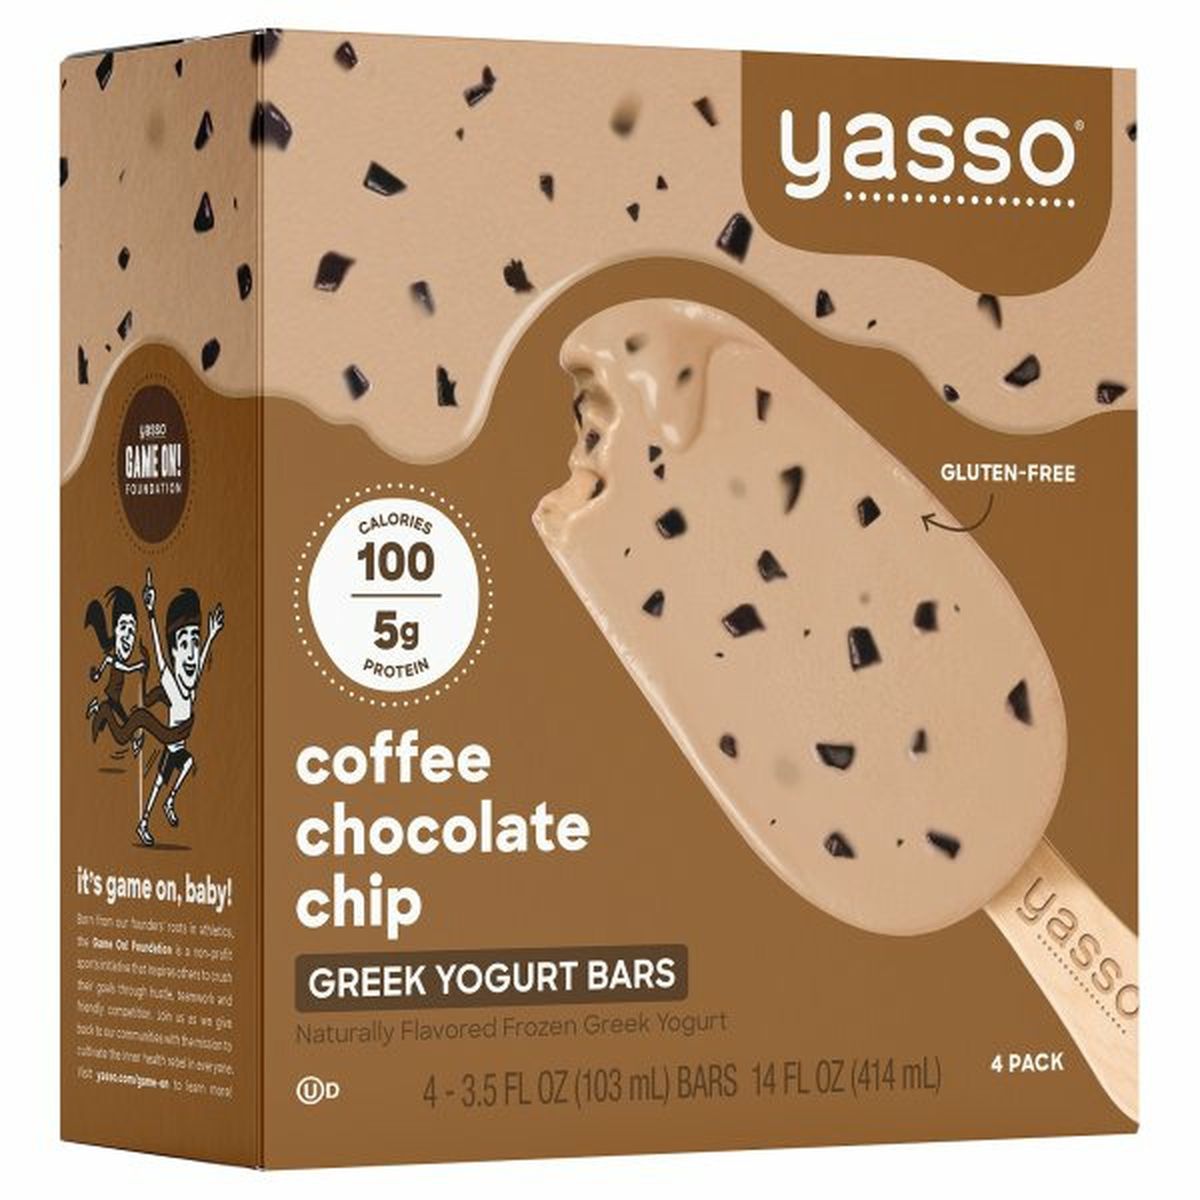 Calories in Yasso Frozen Greek Yogurt, Coffee Chocolate Chip Bars, 4 pack